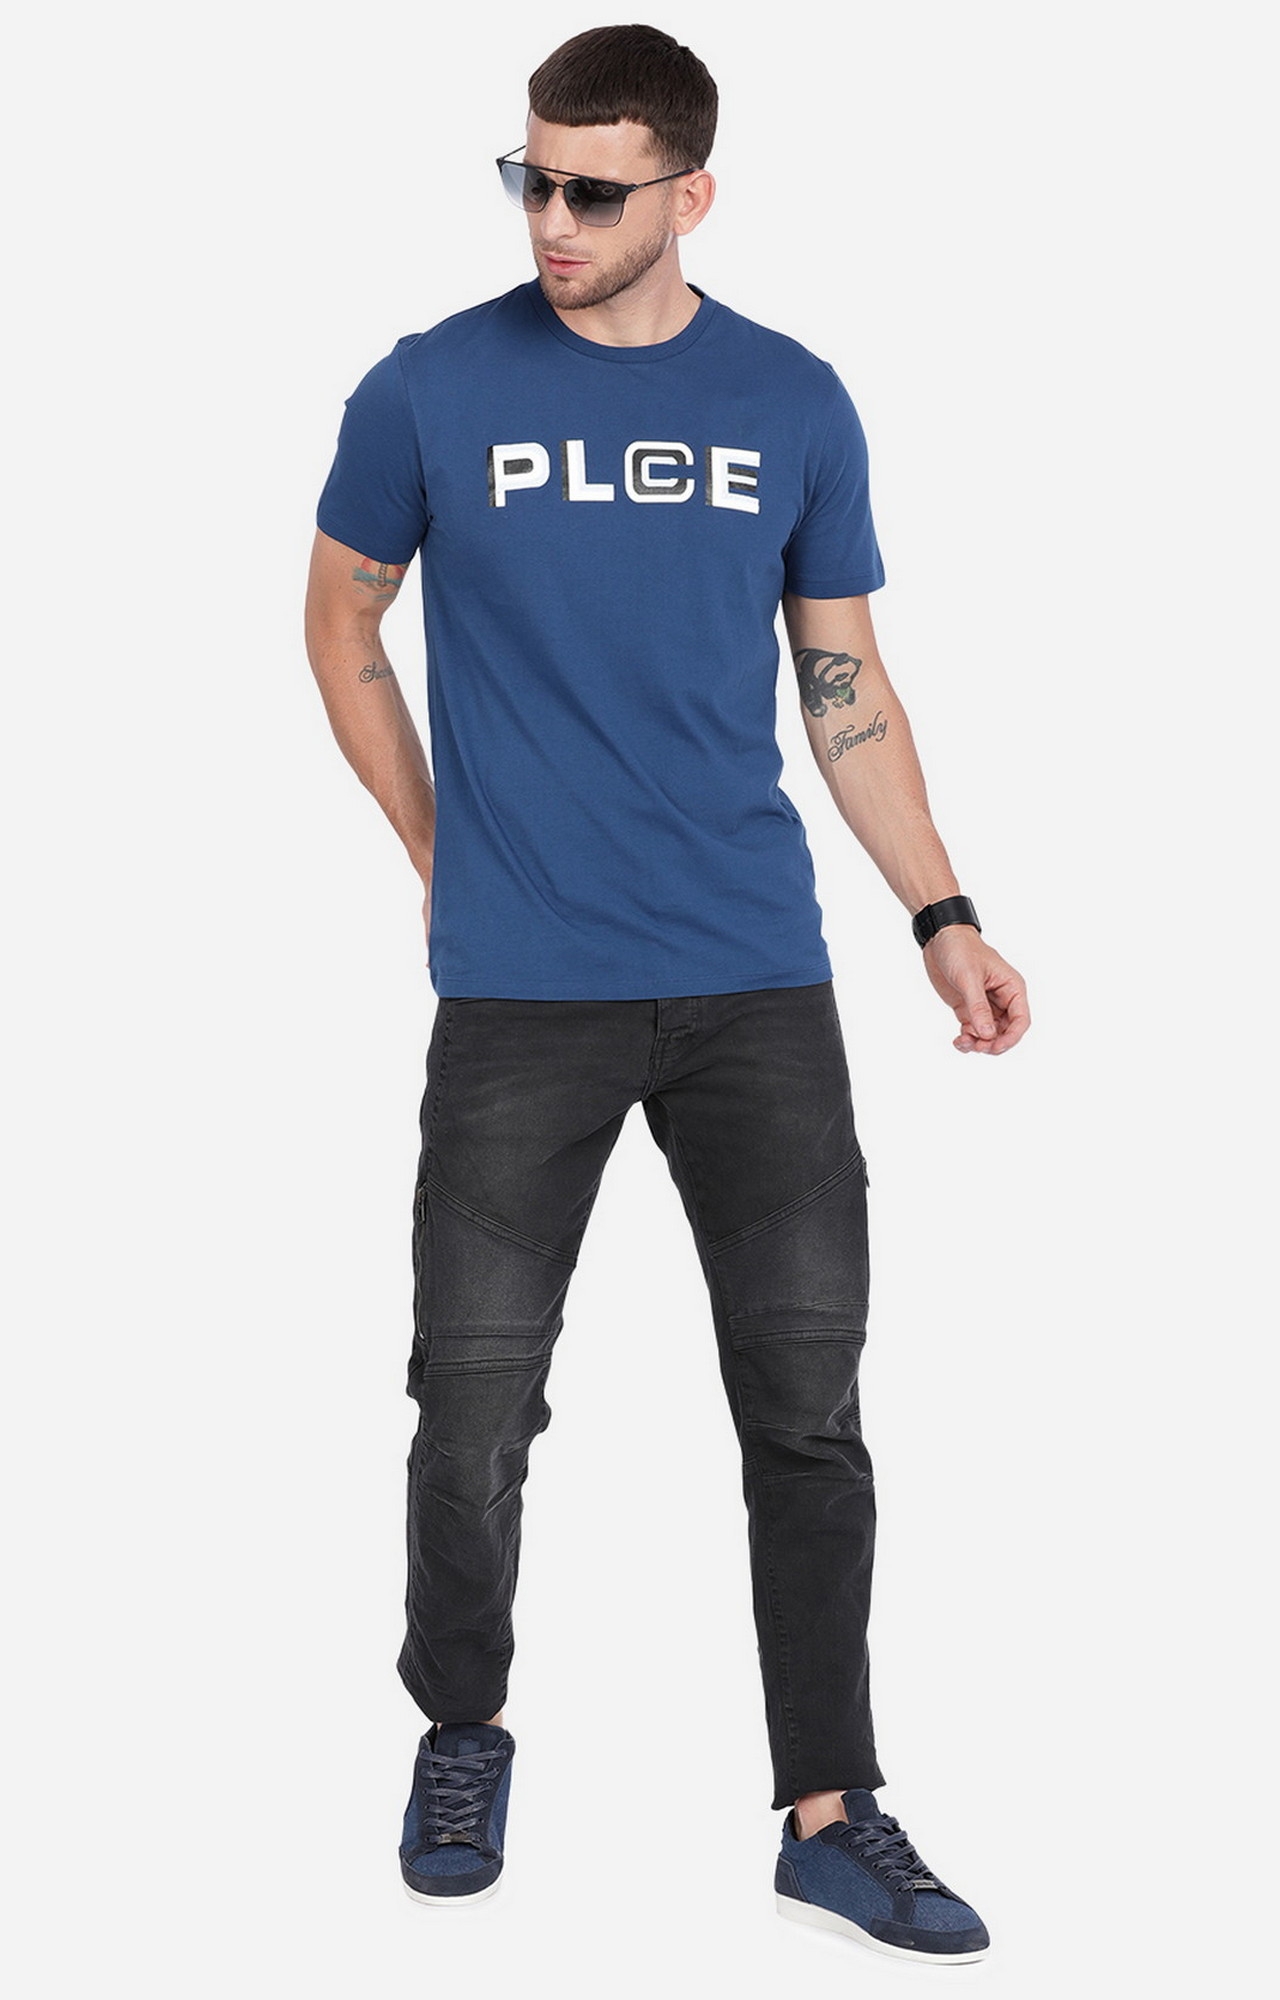 883 Police | Men's Navy Cotton Typographic Printed T-Shirt 7